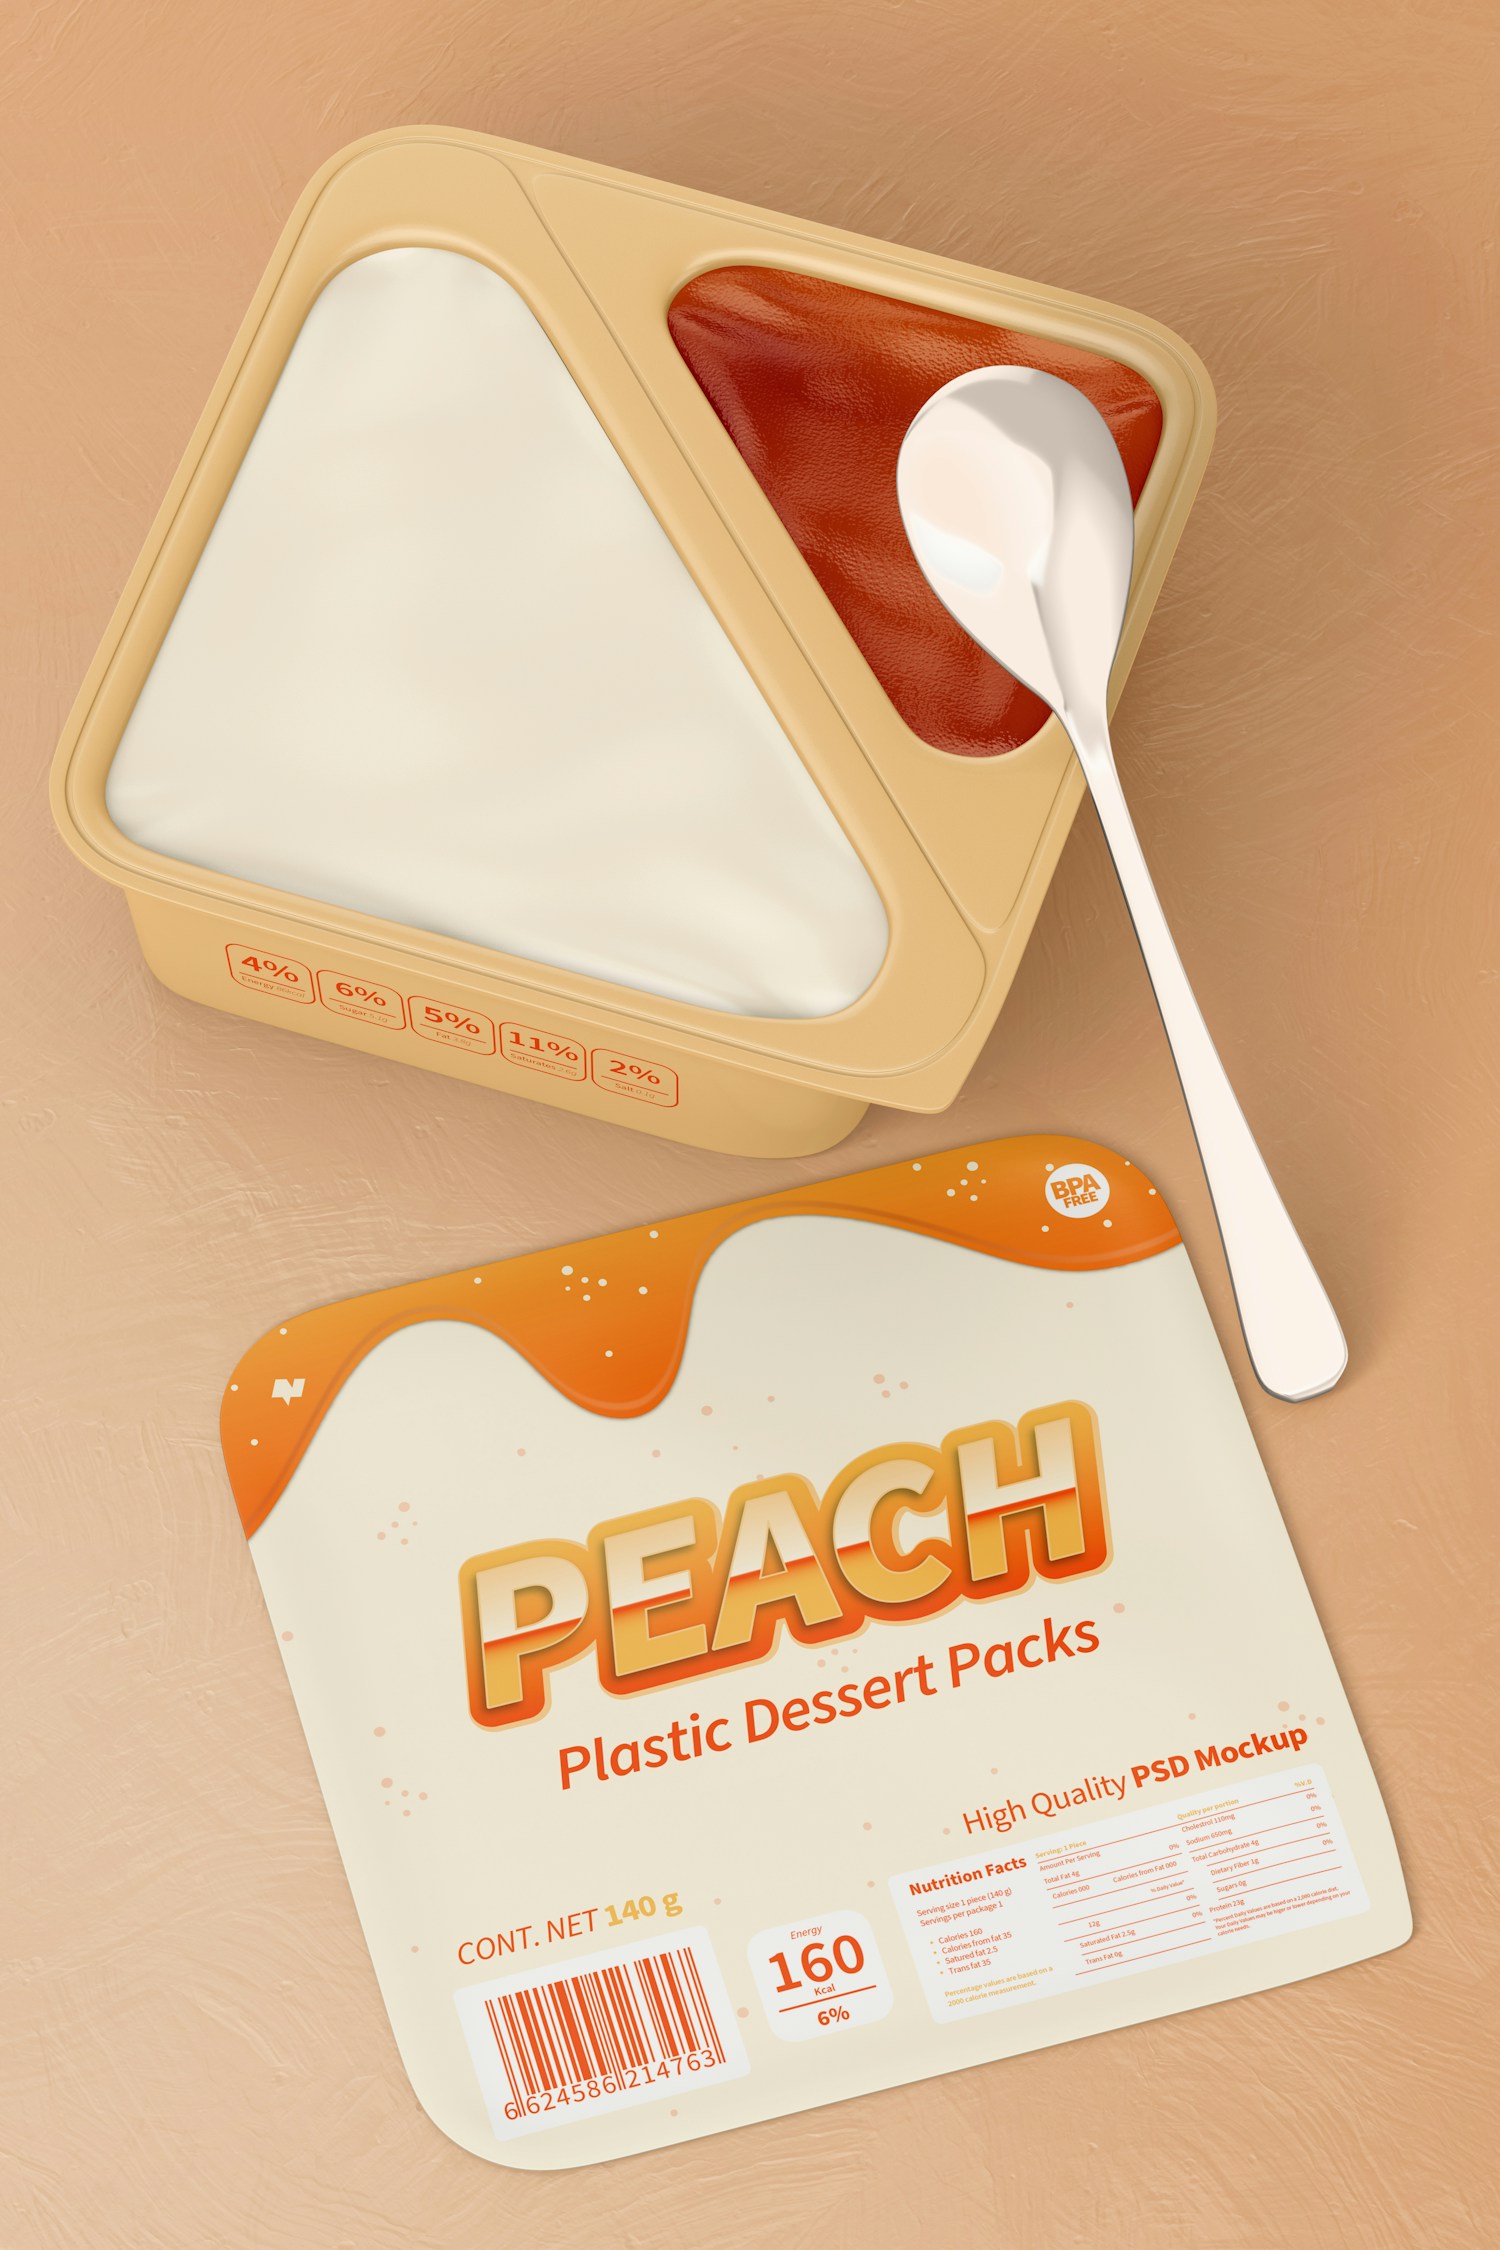 Plastic Dessert Pack Mockup, Top View